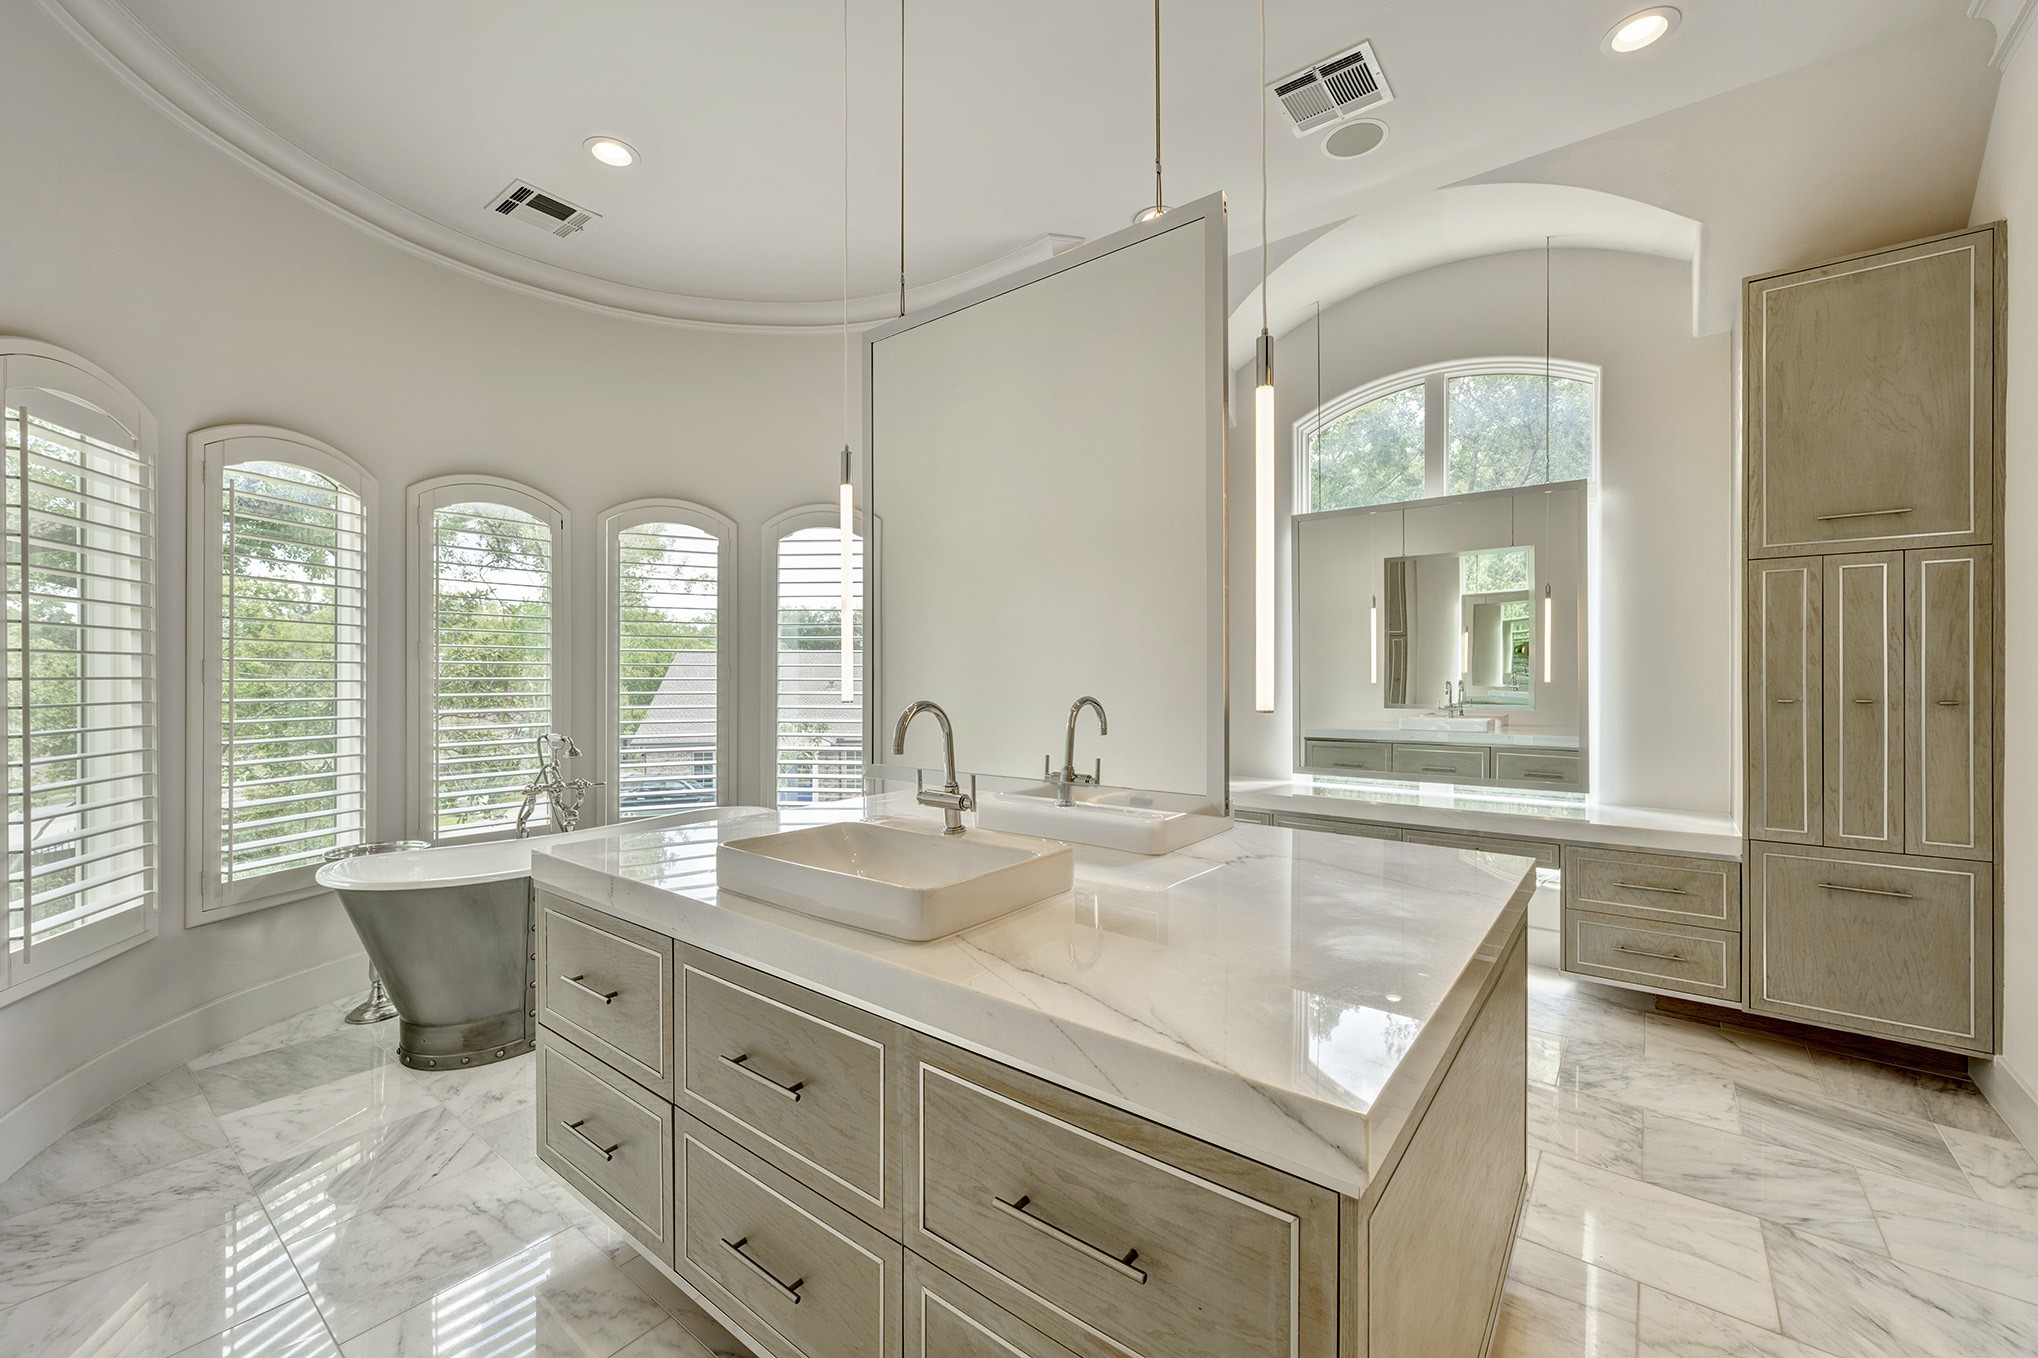 Primary en-suite bath with great lighting, free-standing tub, separate walk-in shower and vanity space